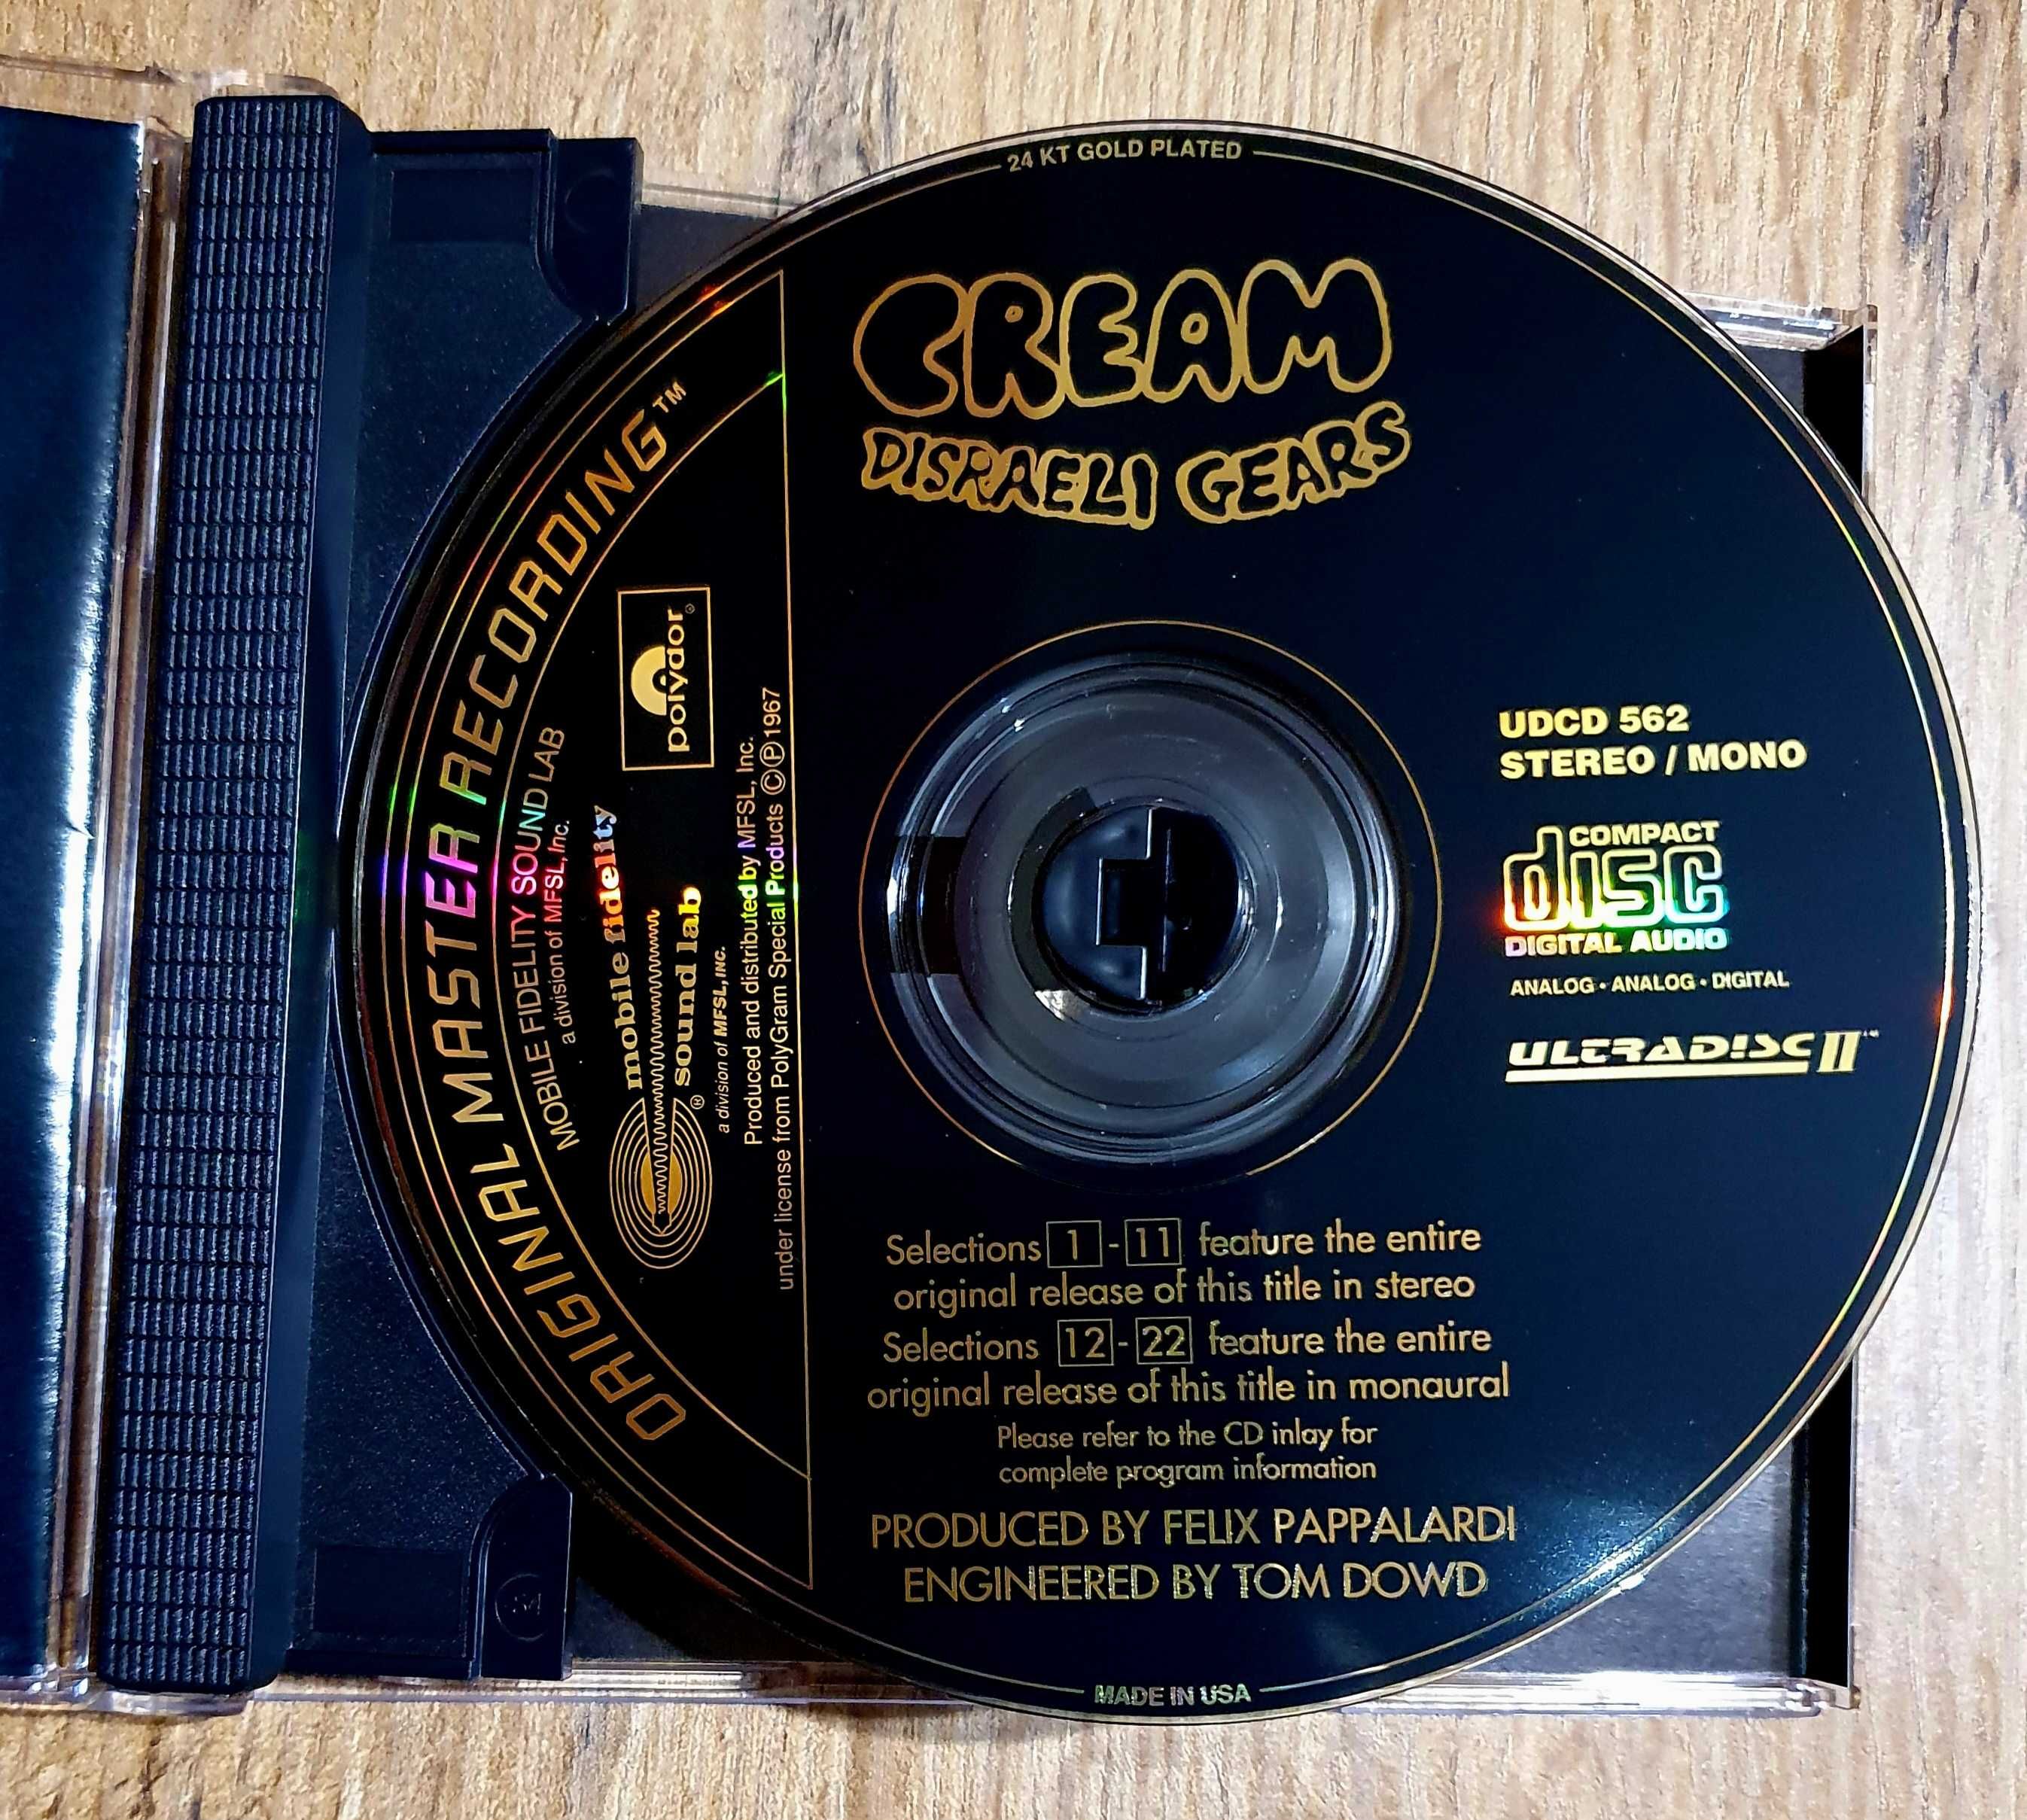 Cream - Disraeli Gears (MFSL 24kt Ltd)